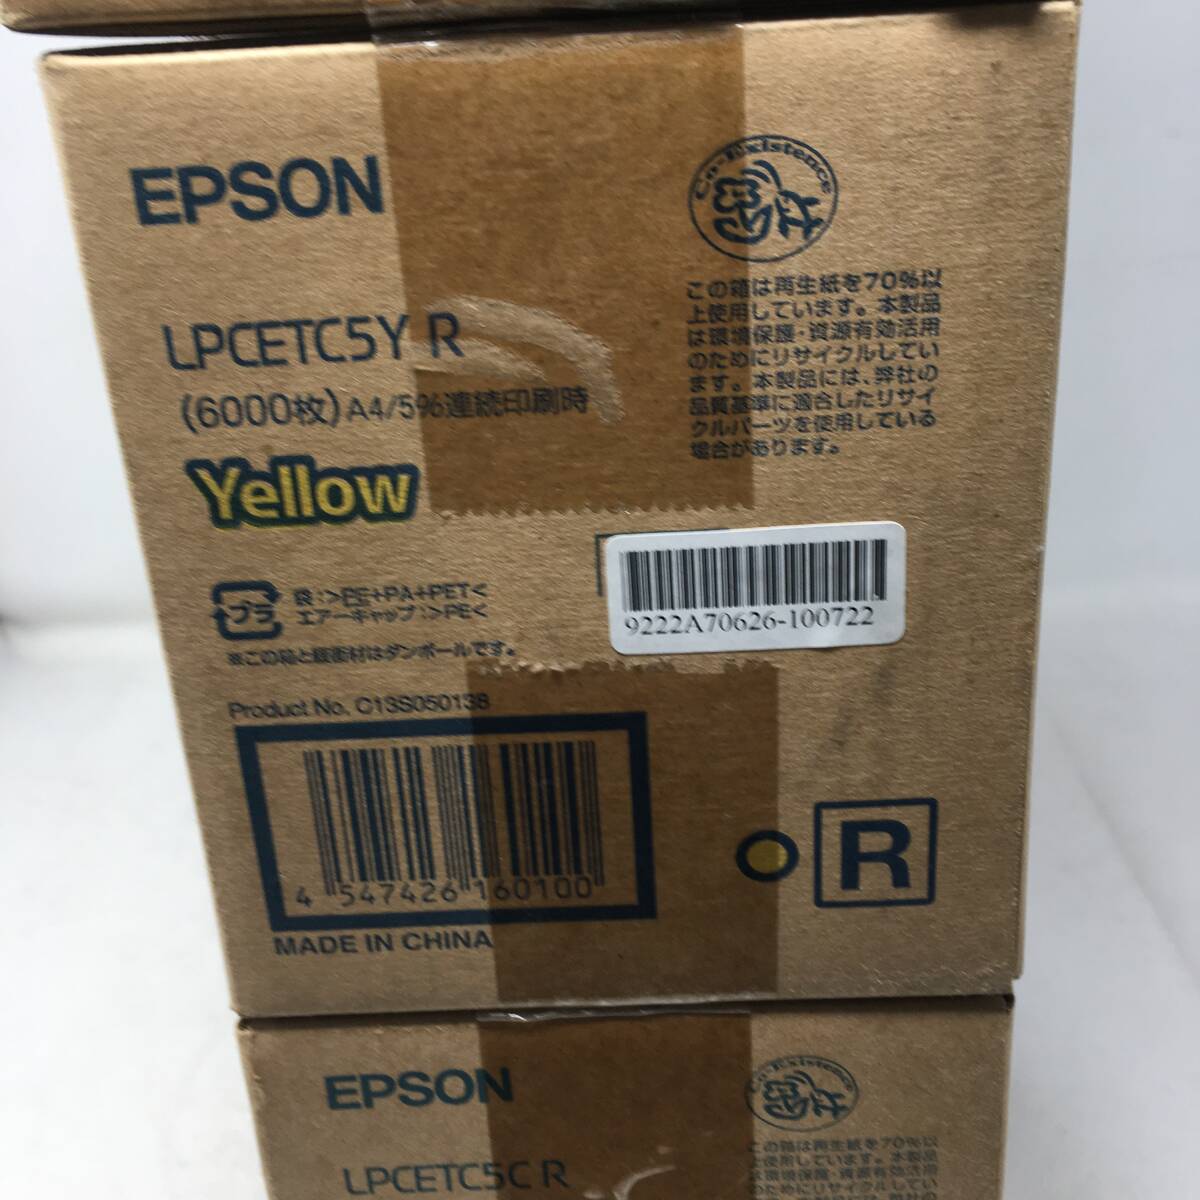 FY-371 unopened EPSON ET cartridge 3 color set magenta Cyan yellow LPCETC5 LP-9000C